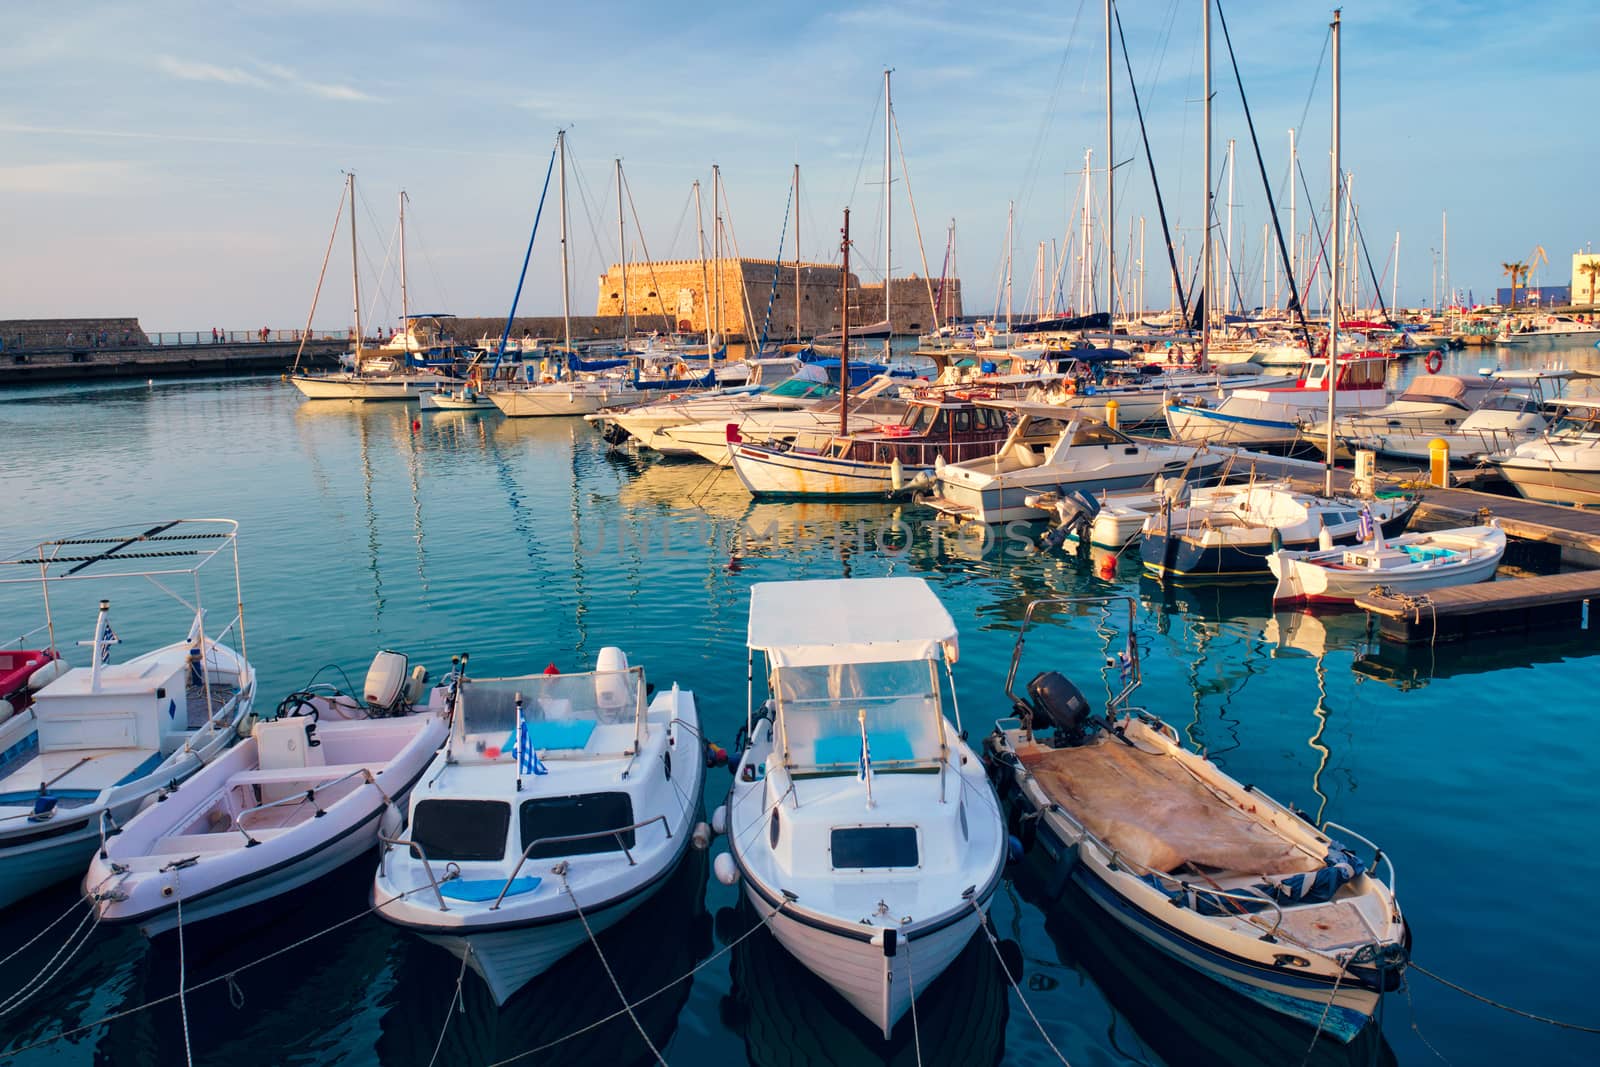 Venetian Fort in Heraklion and moored fishing boats, Crete Island, Greece by dimol